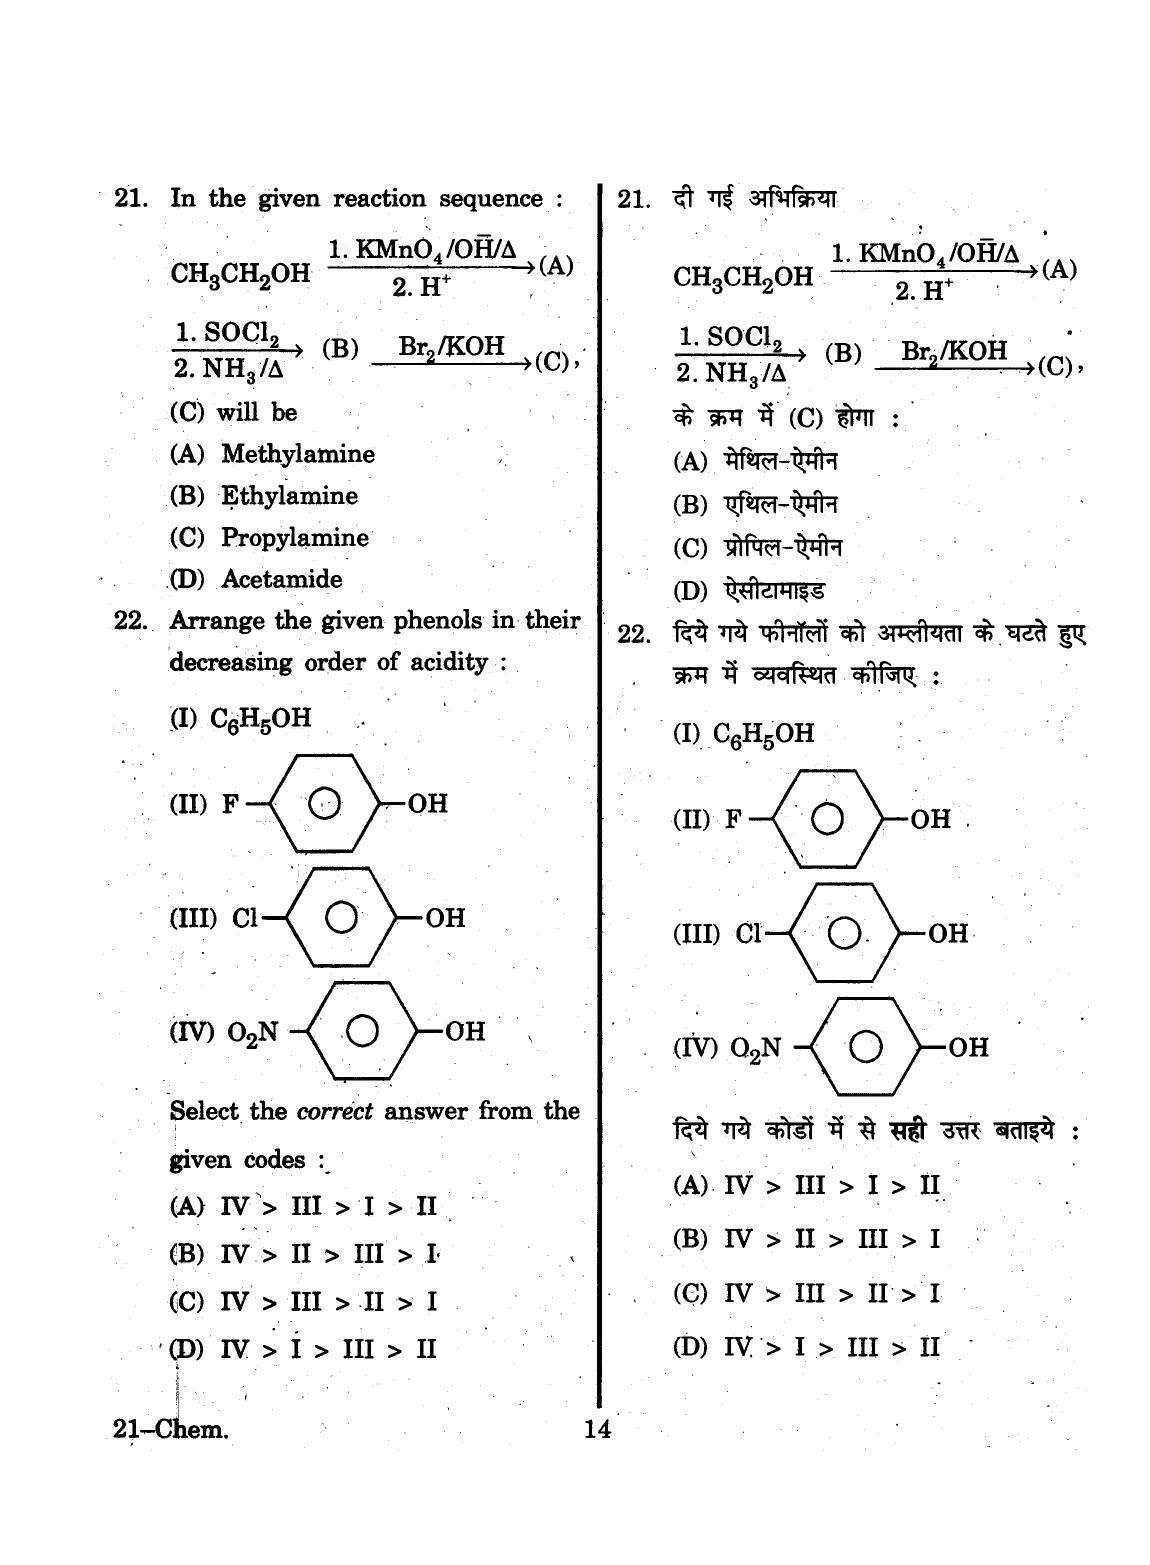 URATPG 2015 Chemisty Question Paper - Page 14